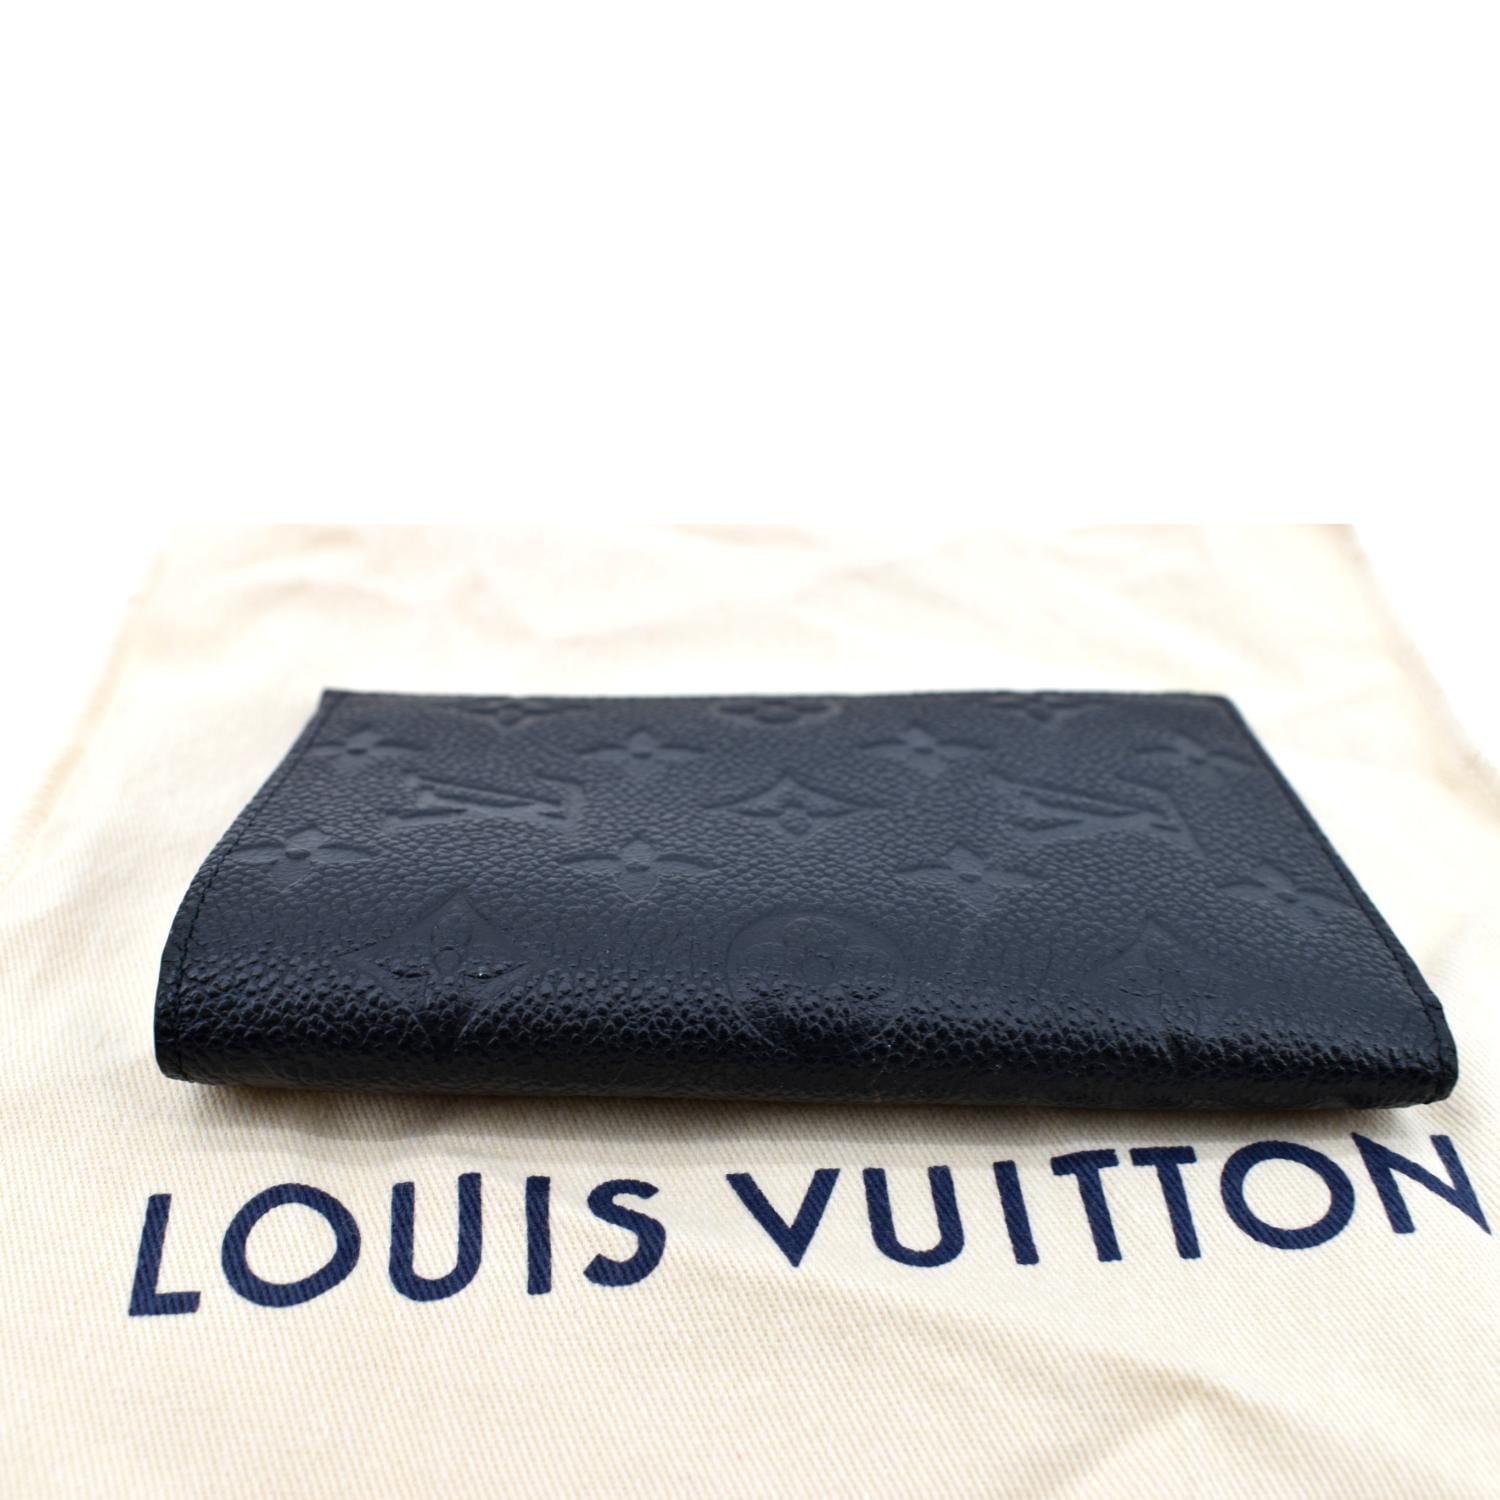 Louis Vuitton - Passport Cover - Monogram Leather - Black - Women - Luxury